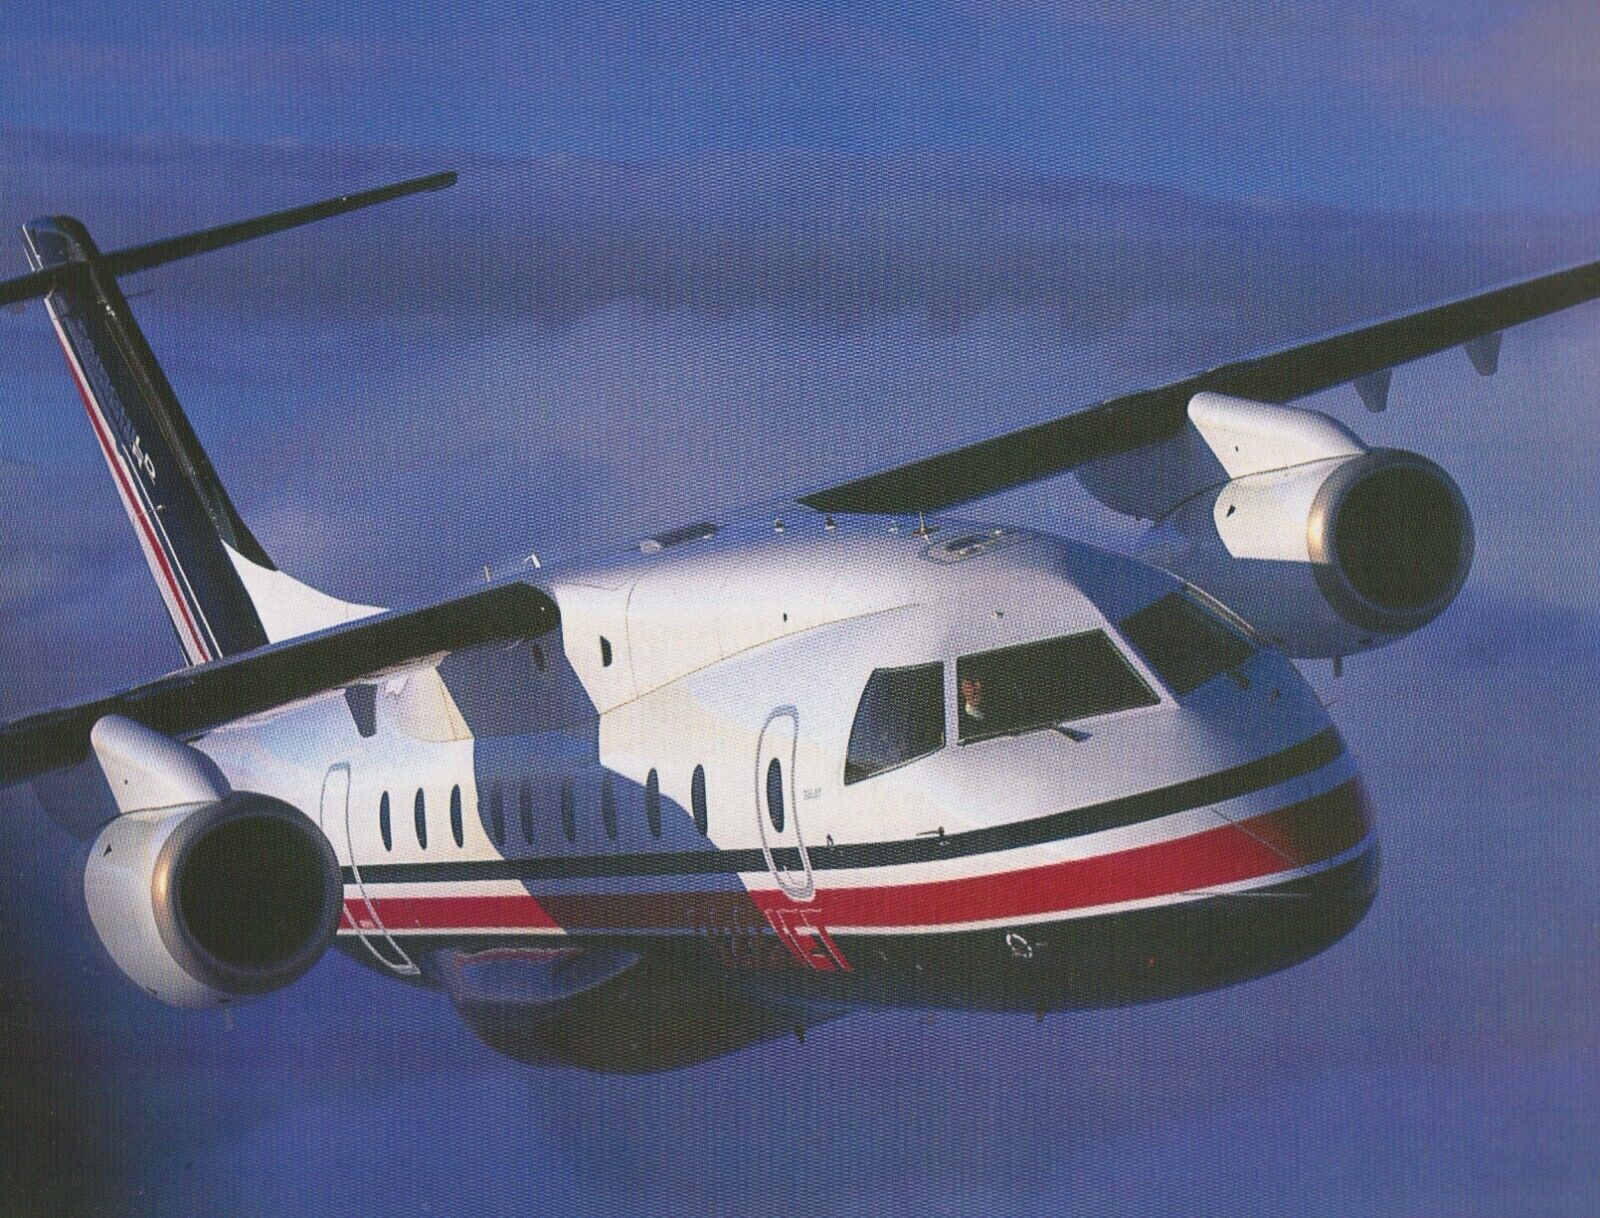 Aviation Manufacturer Photo - Fairchild Dornier 328 Jet Airliner (1998)